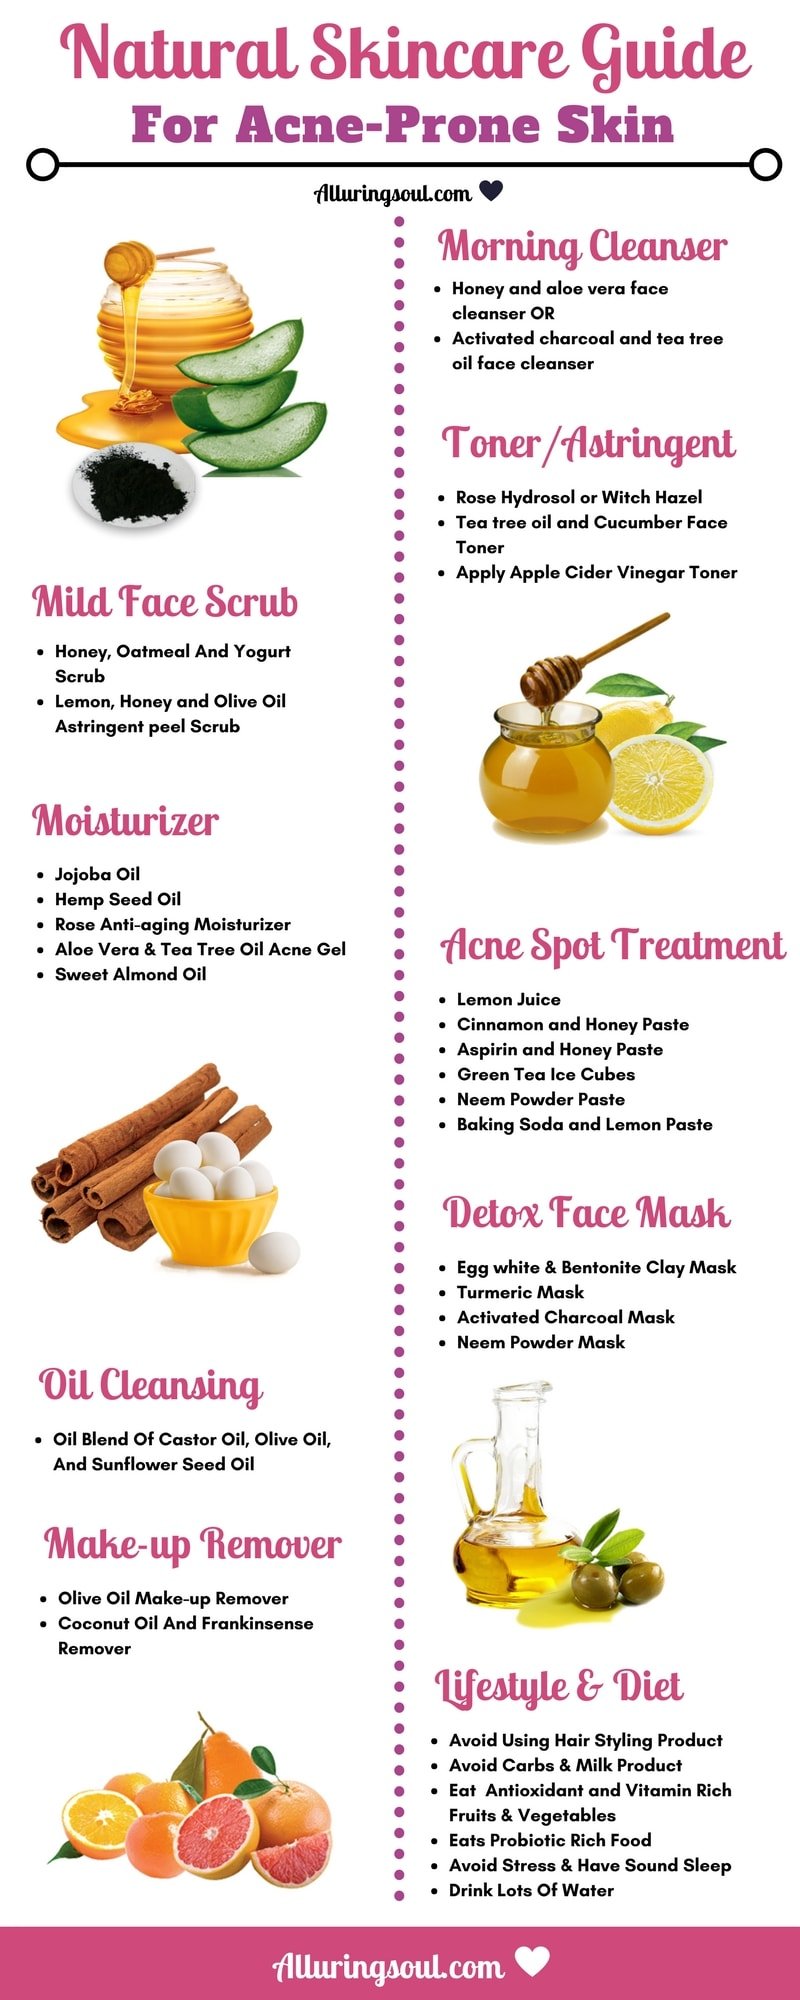 Natural Skincare Guide for Acne Prone Skin